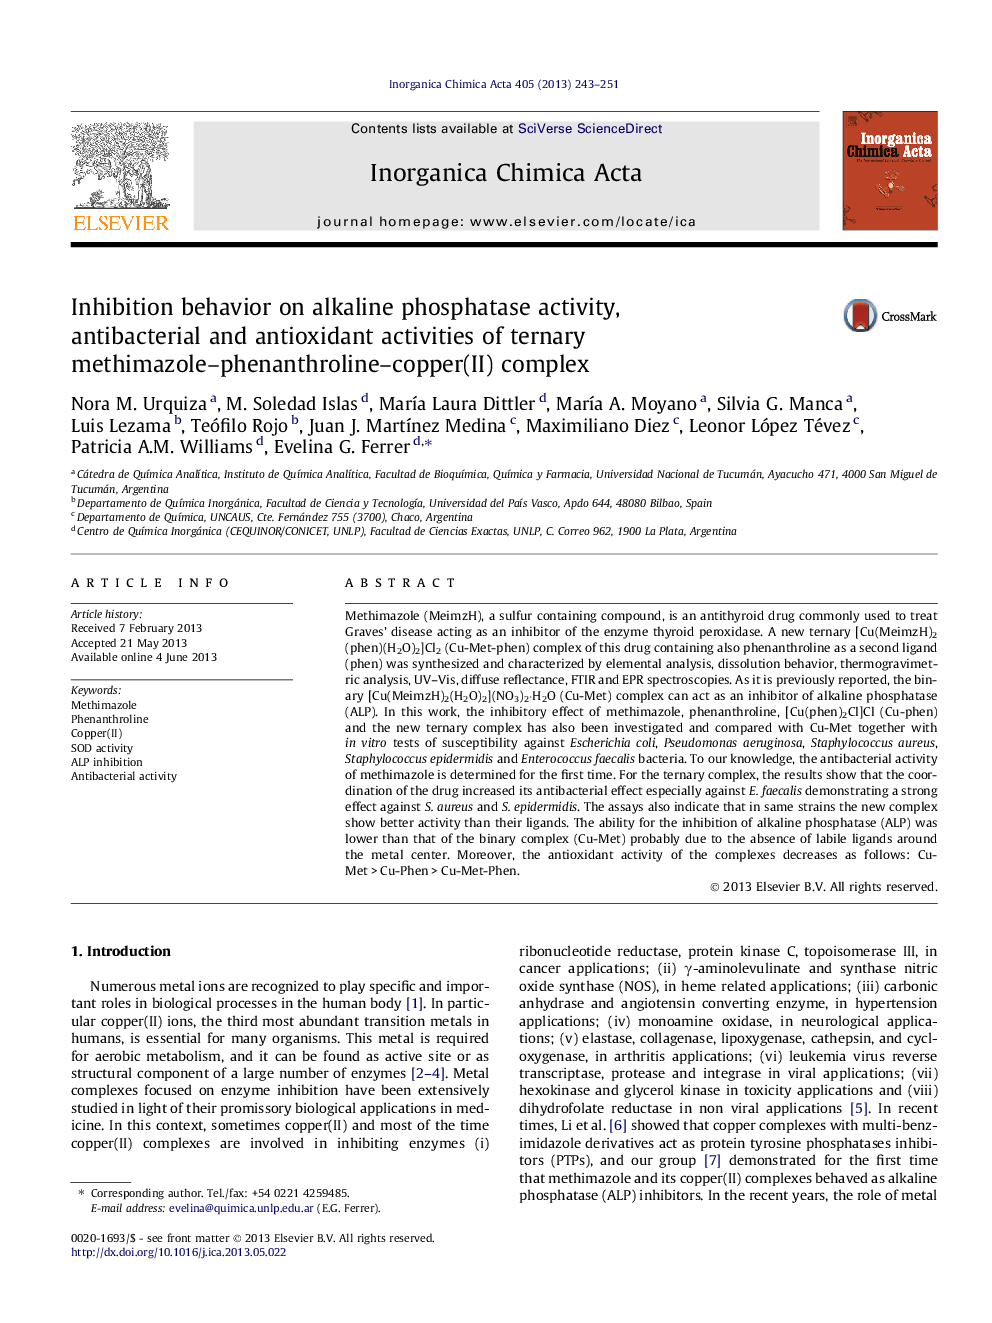 Inhibition behavior on alkaline phosphatase activity, antibacterial and antioxidant activities of ternary methimazole-phenanthroline-copper(II) complex